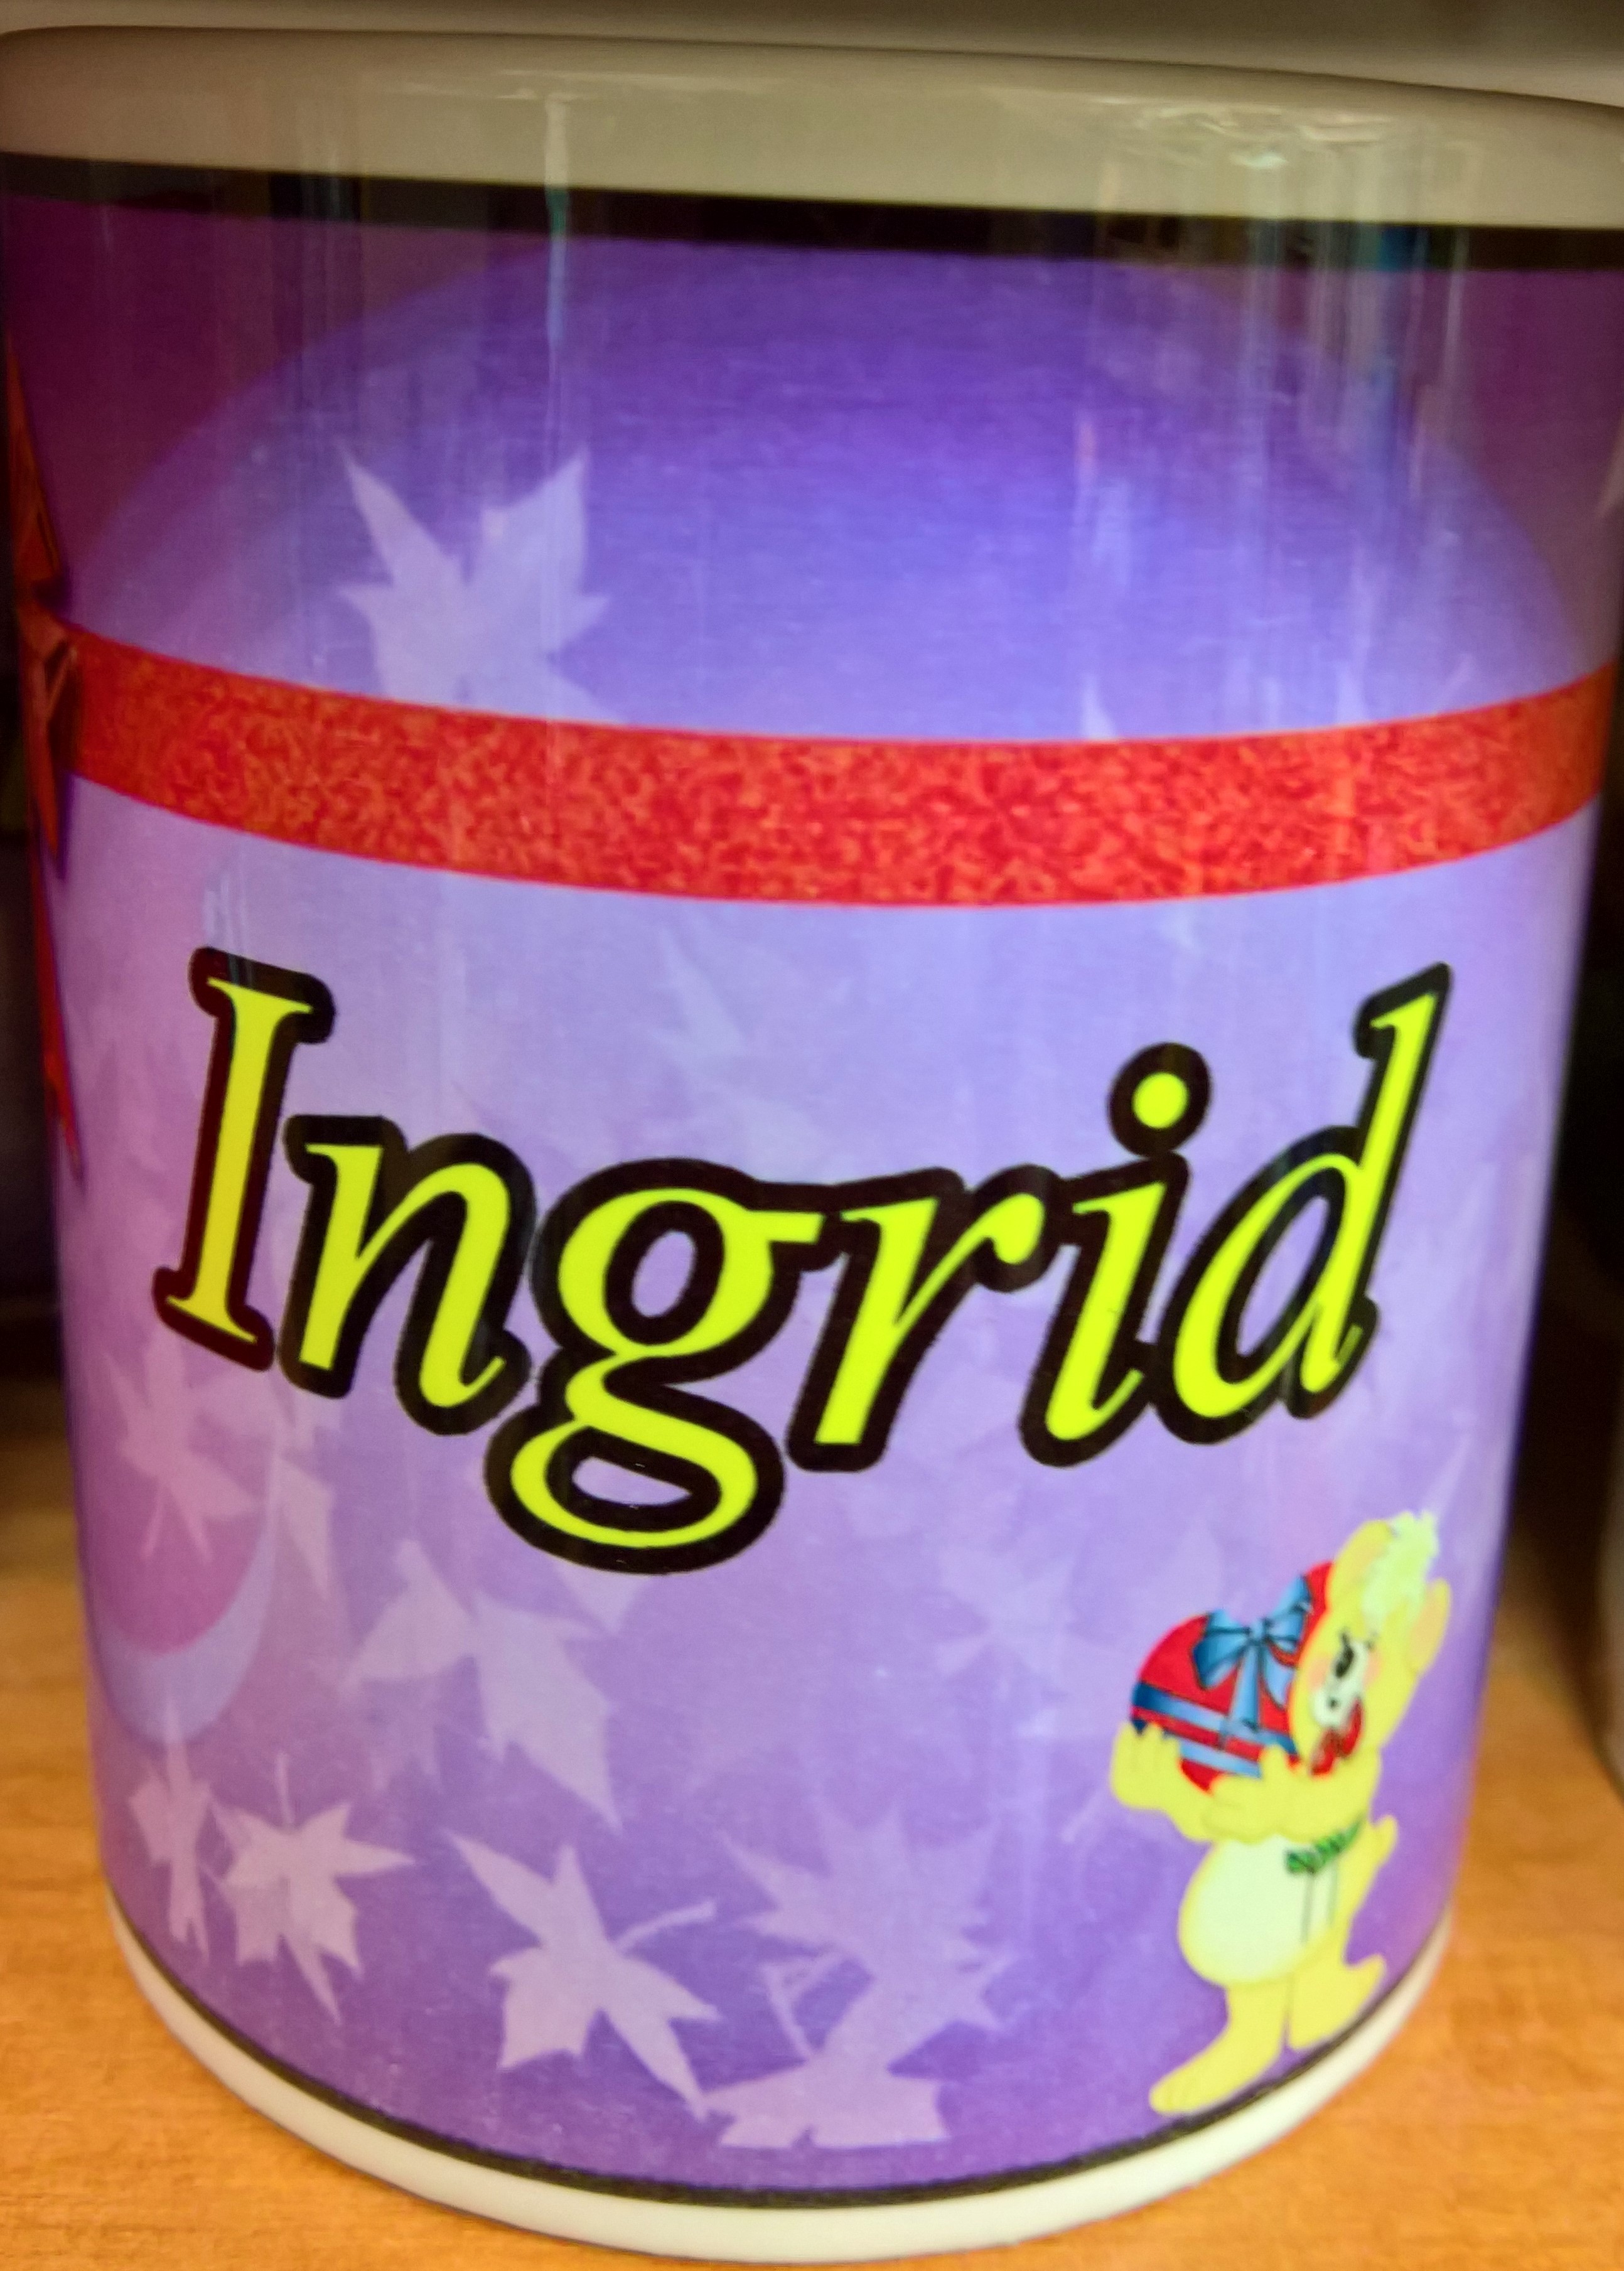 Hrnček "Ingrid"